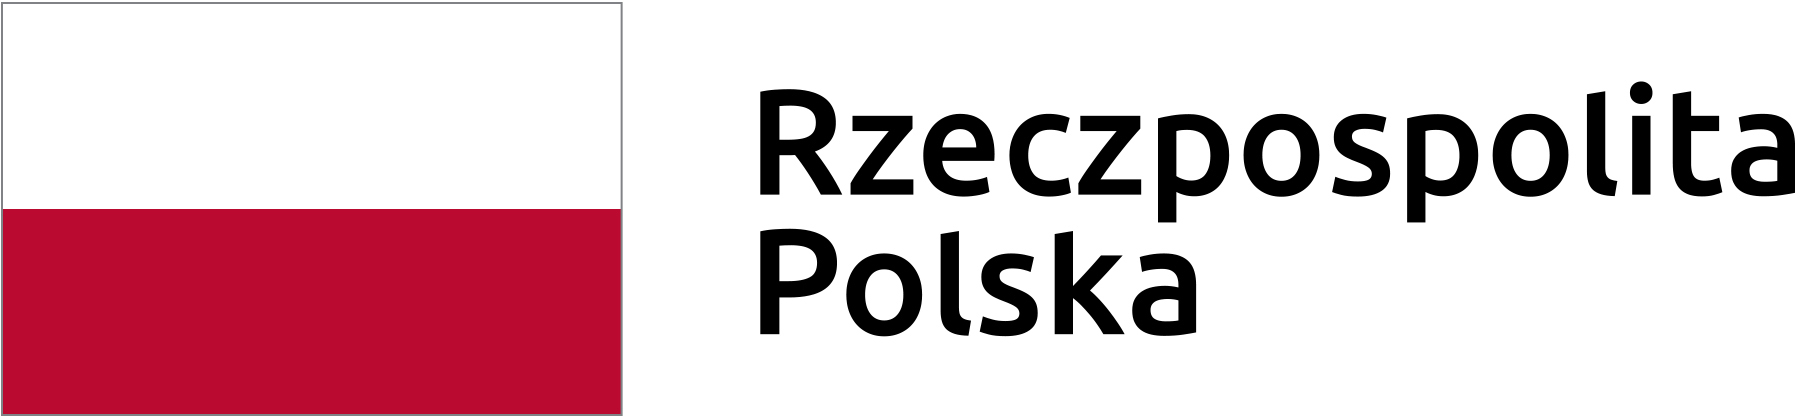 Flaga Rzeczpospolita Polska